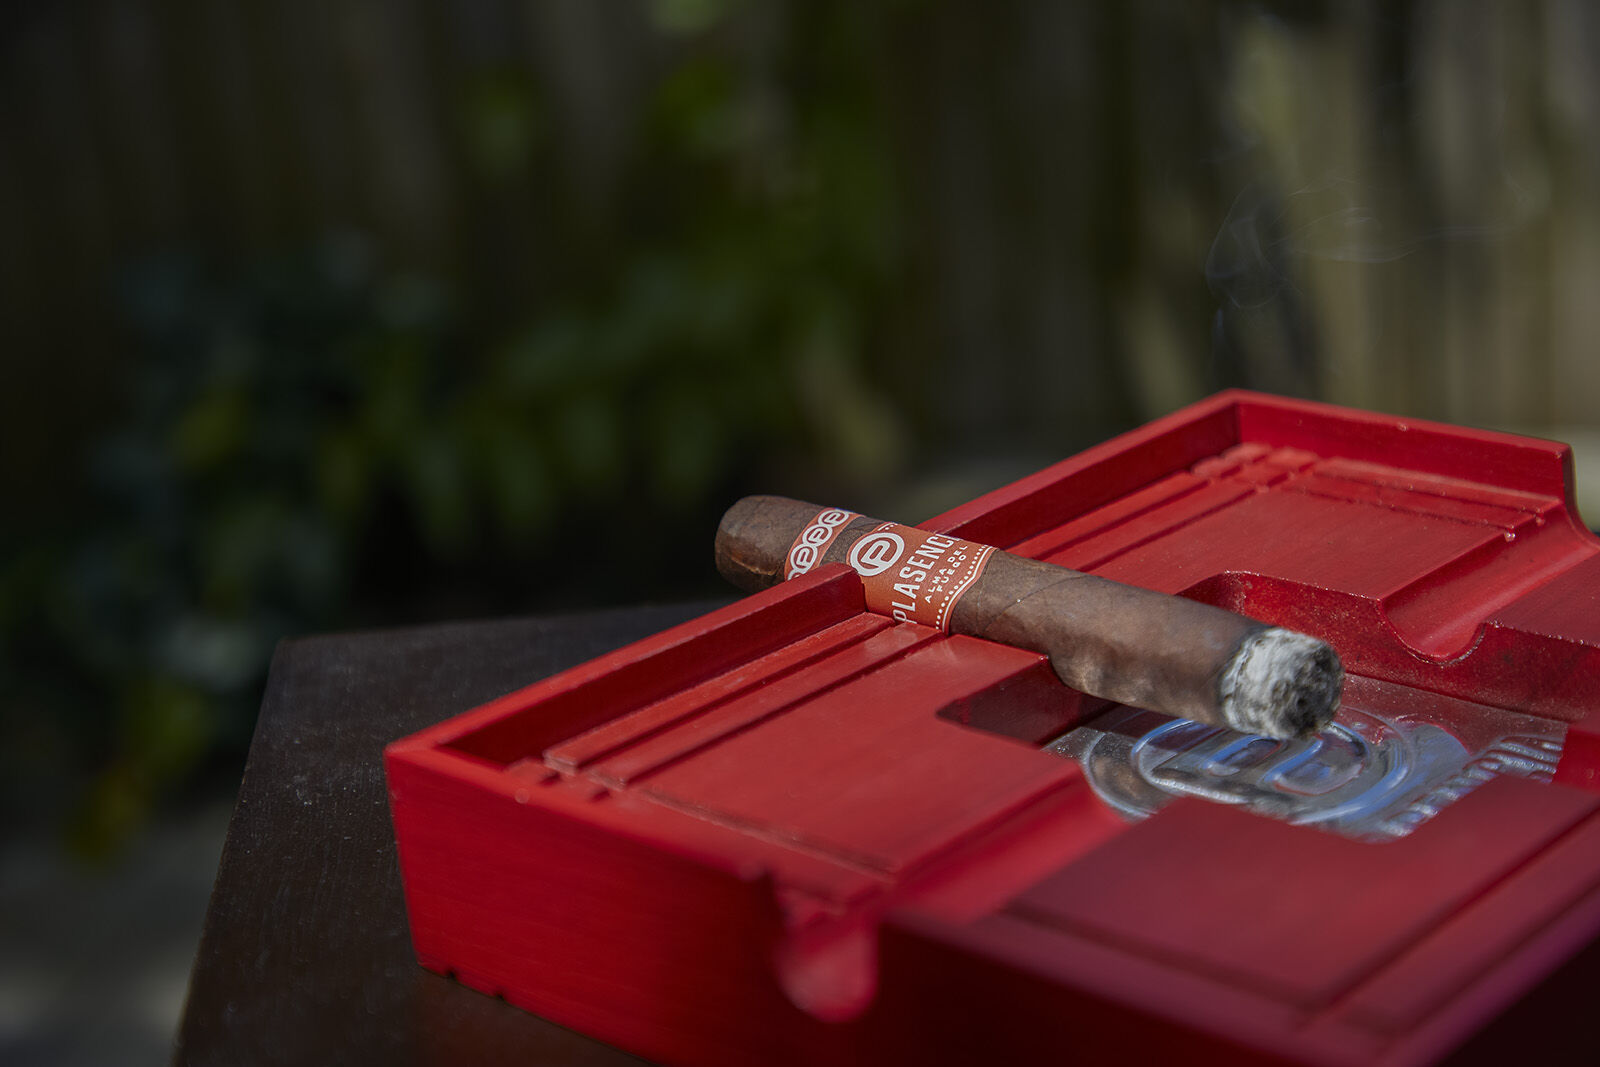 Shop All Cigar Brands | Cigora - Cigars and Accessories